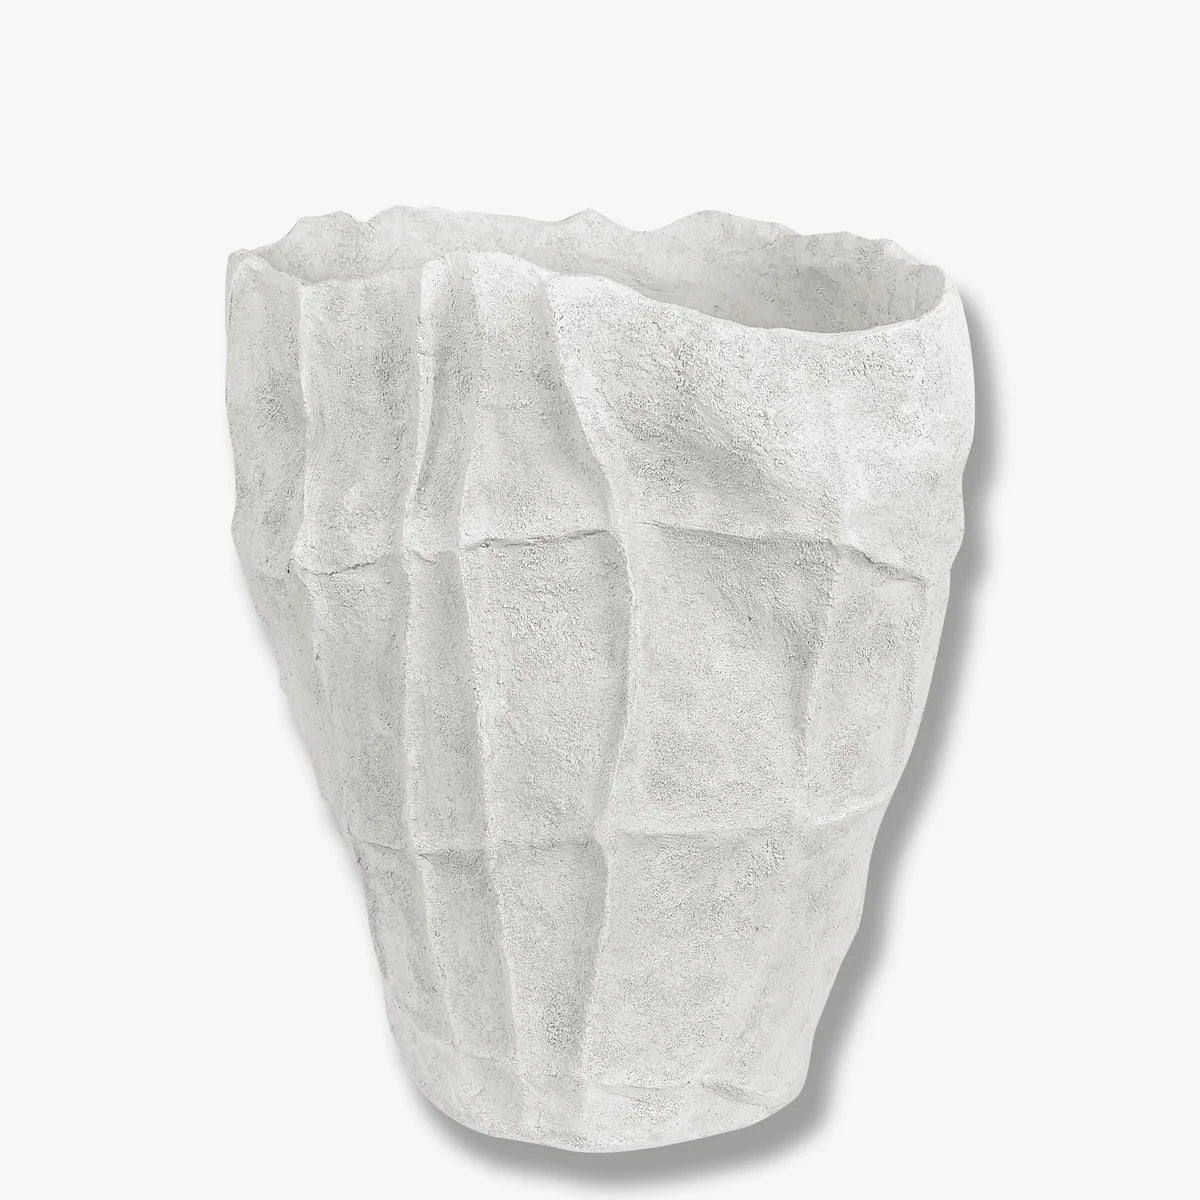 HINTSDECO Βάζο Διακοσμητικό Βάζο Artistic Ρητίνη Πέτρας Εκρού W30 x L18 x H33,5 cm Mette Ditmer